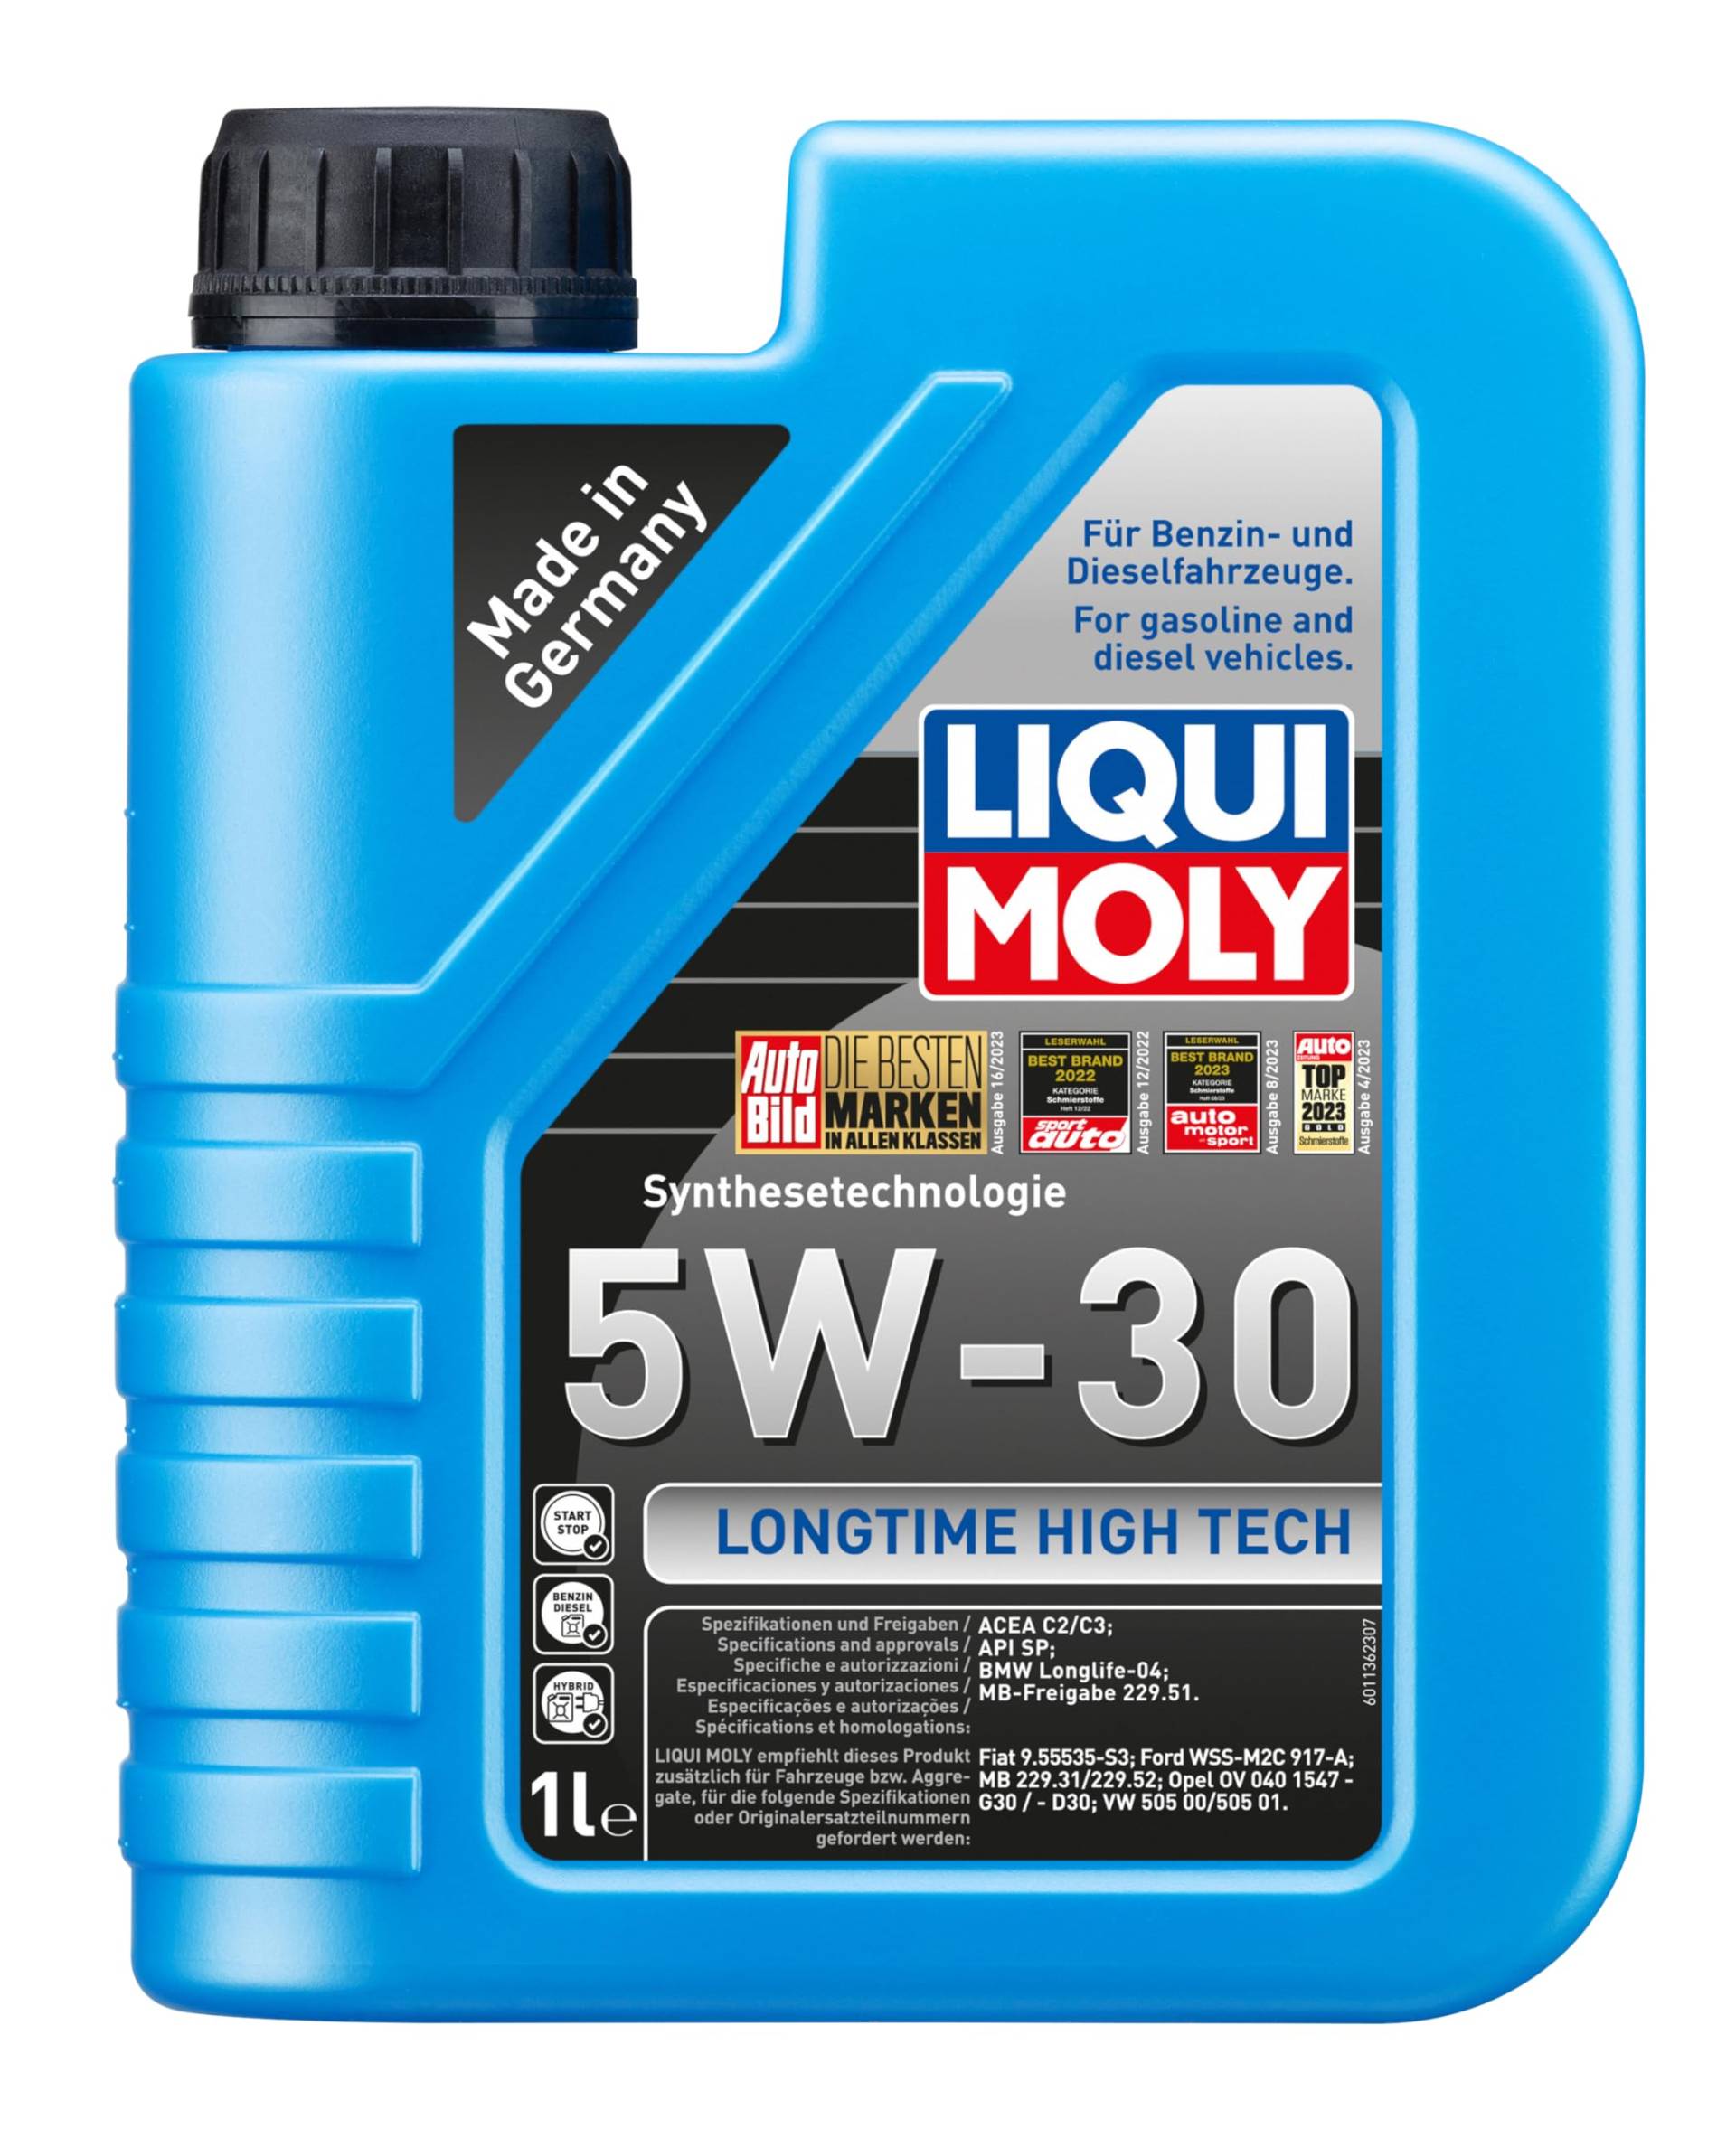 LIQUI MOLY Longtime High Tech 5W-30 | 1 L | Synthesetechnologie Motoröl | Art.-Nr.: 1136 von Liqui Moly